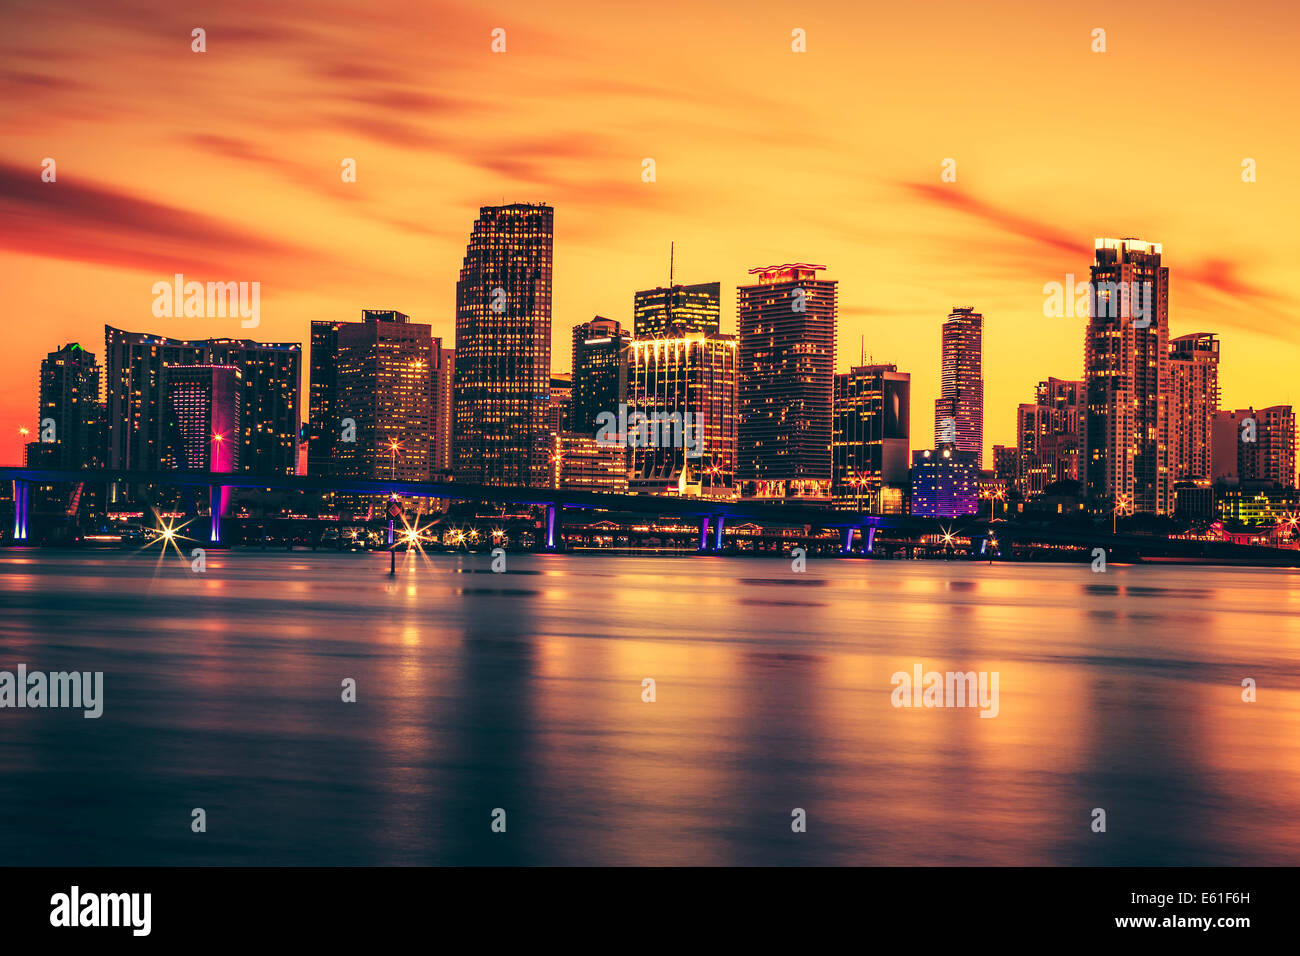 CIty of Miami at sunset, USA Stock Photo